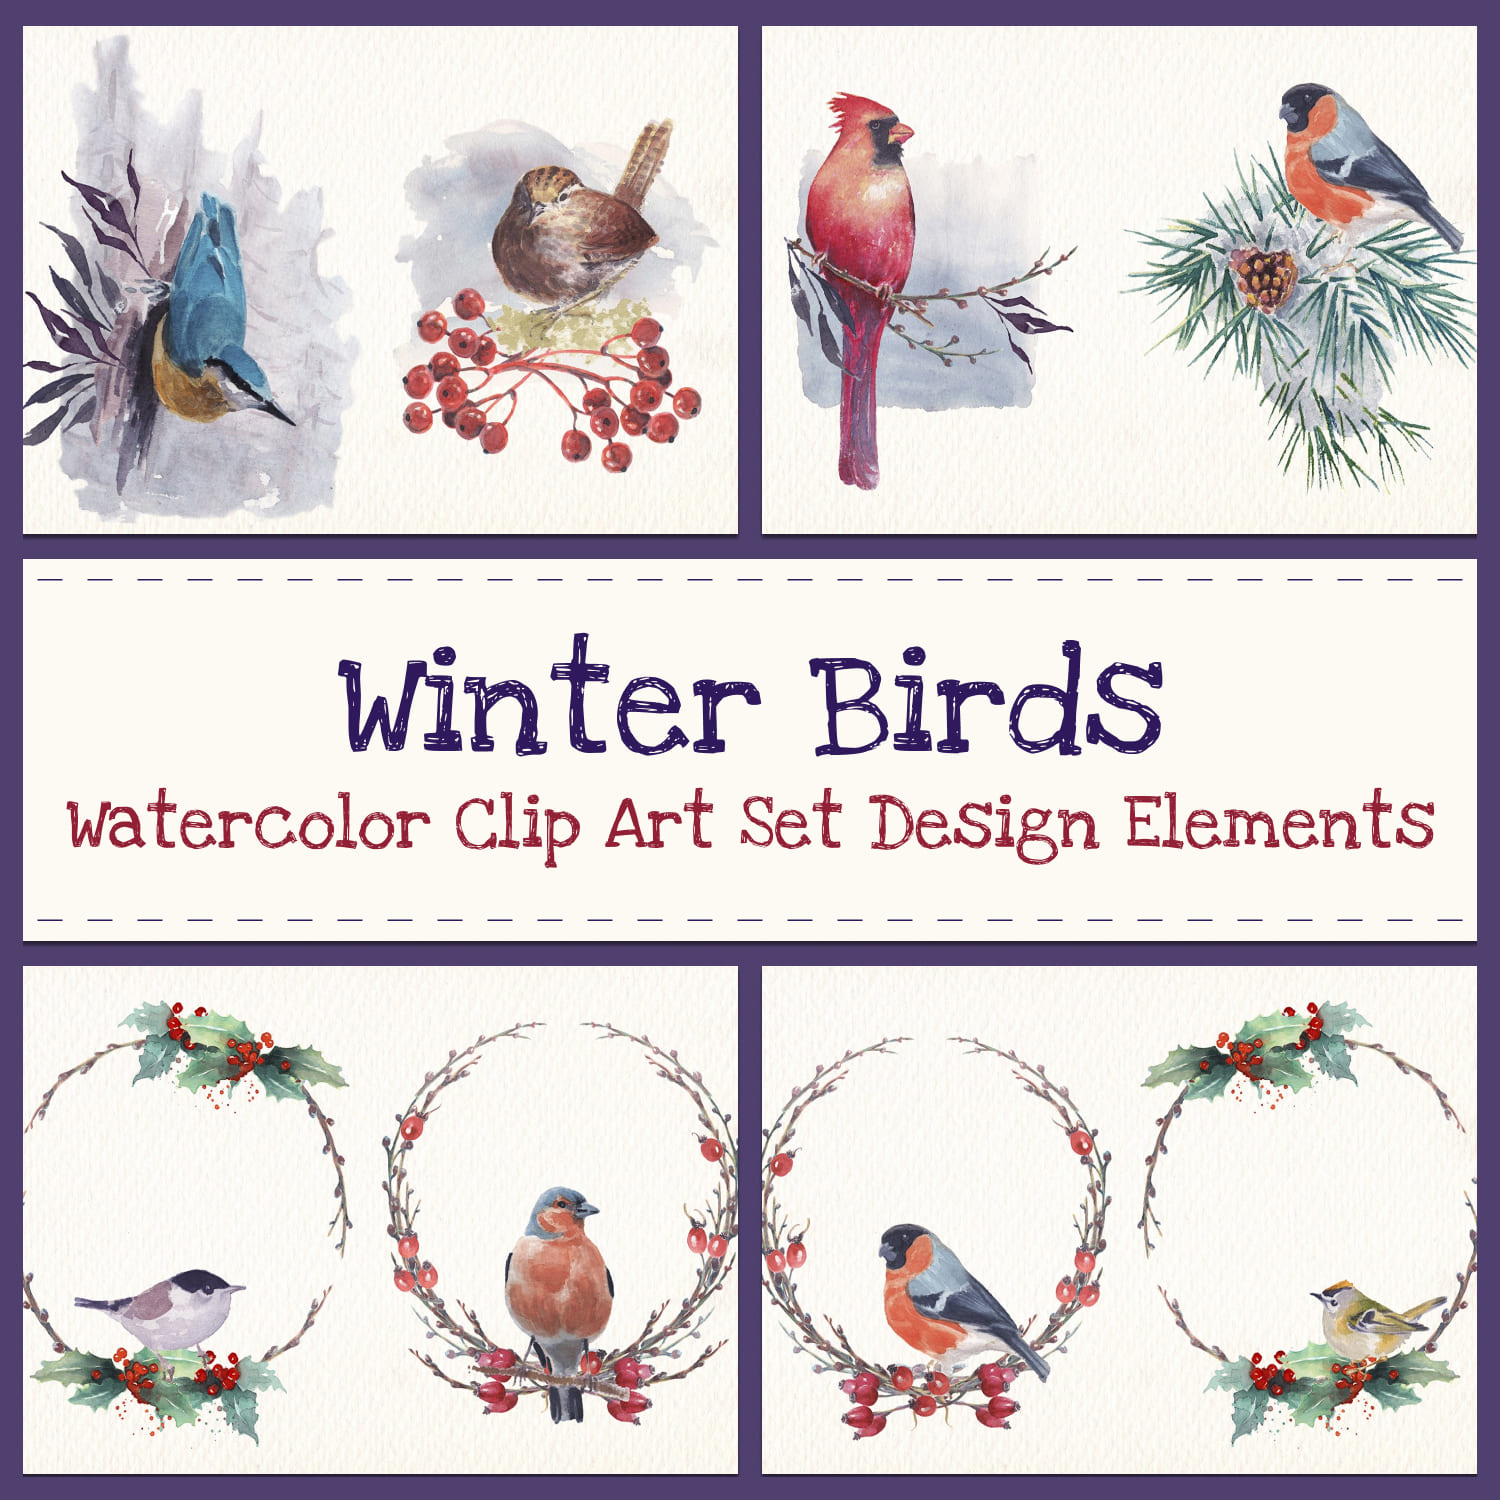 Winter birds watercolor clip art set - main image preview.